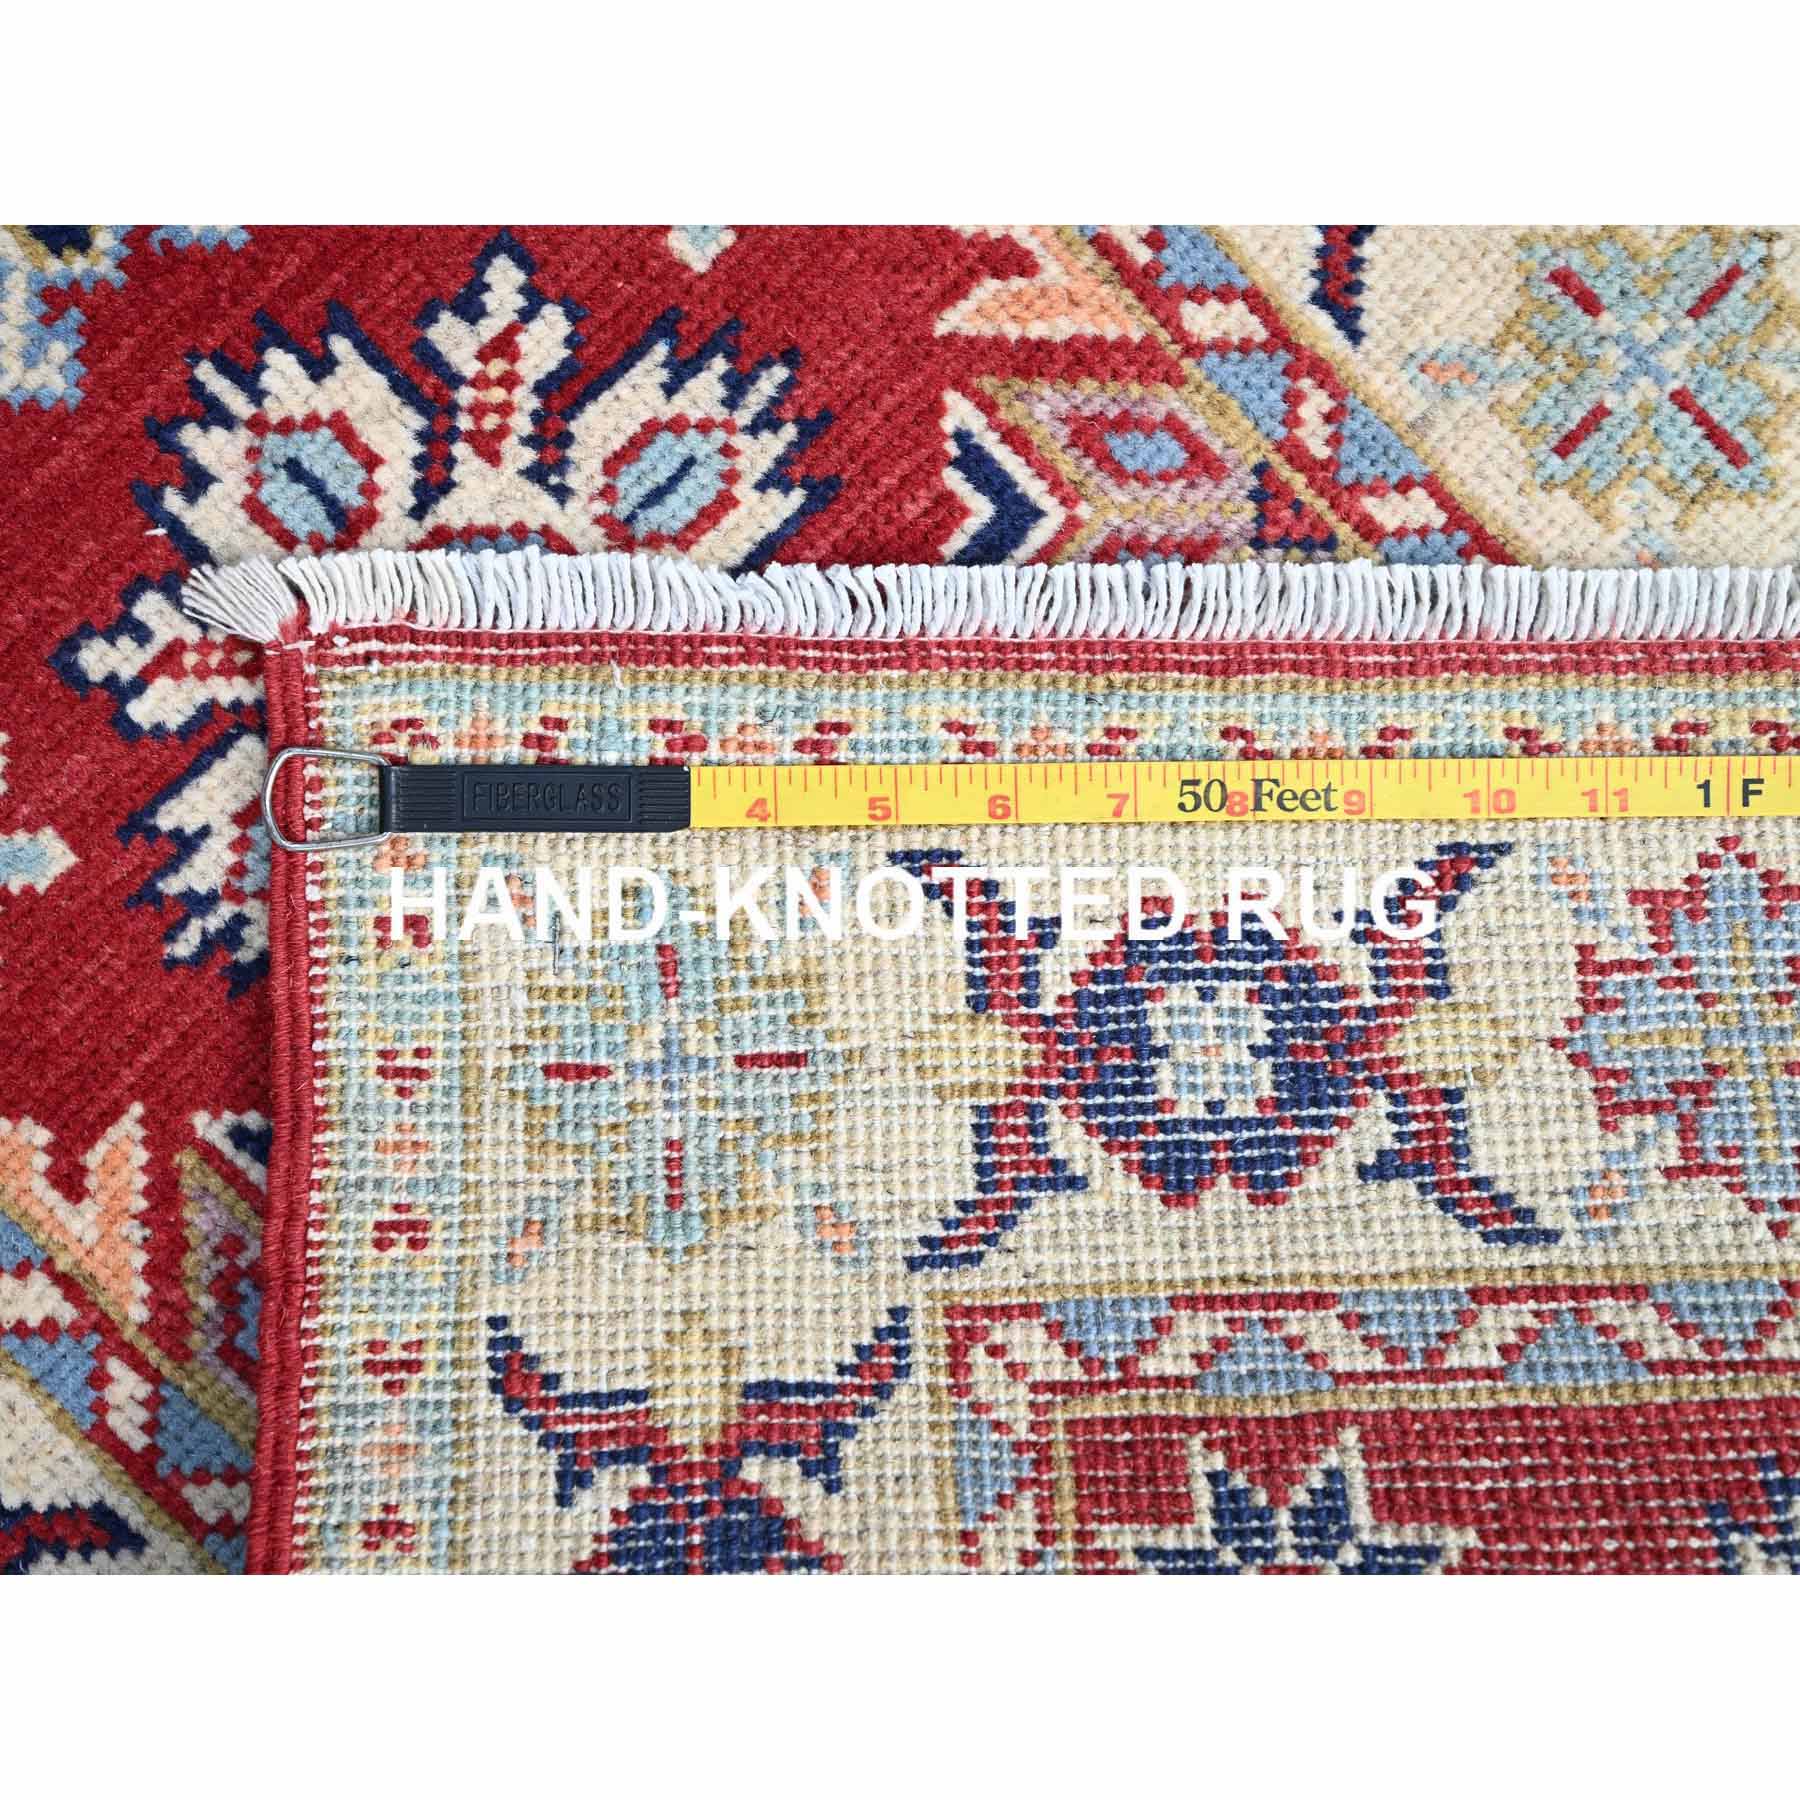 Kazak-Hand-Knotted-Rug-434150